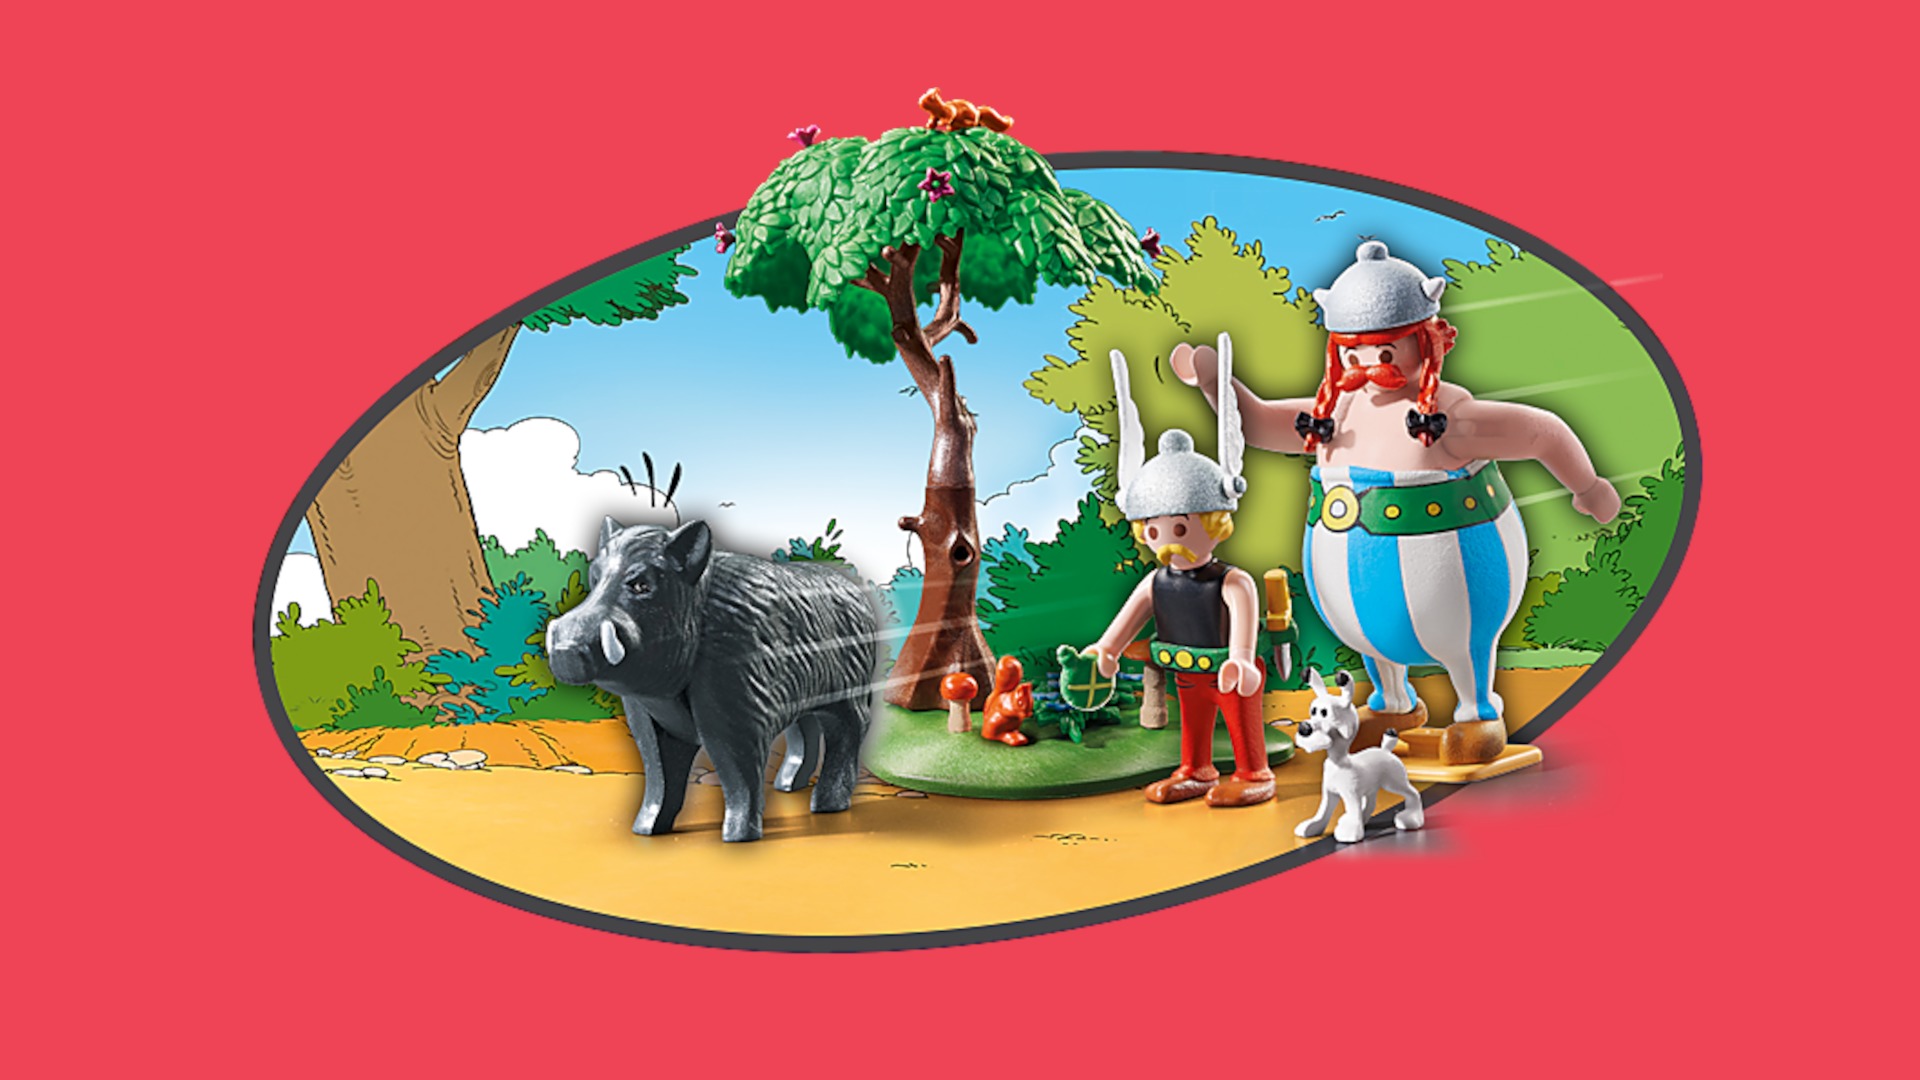 Playmobil France sur LinkedIn : #playmobil #asterix #obelix